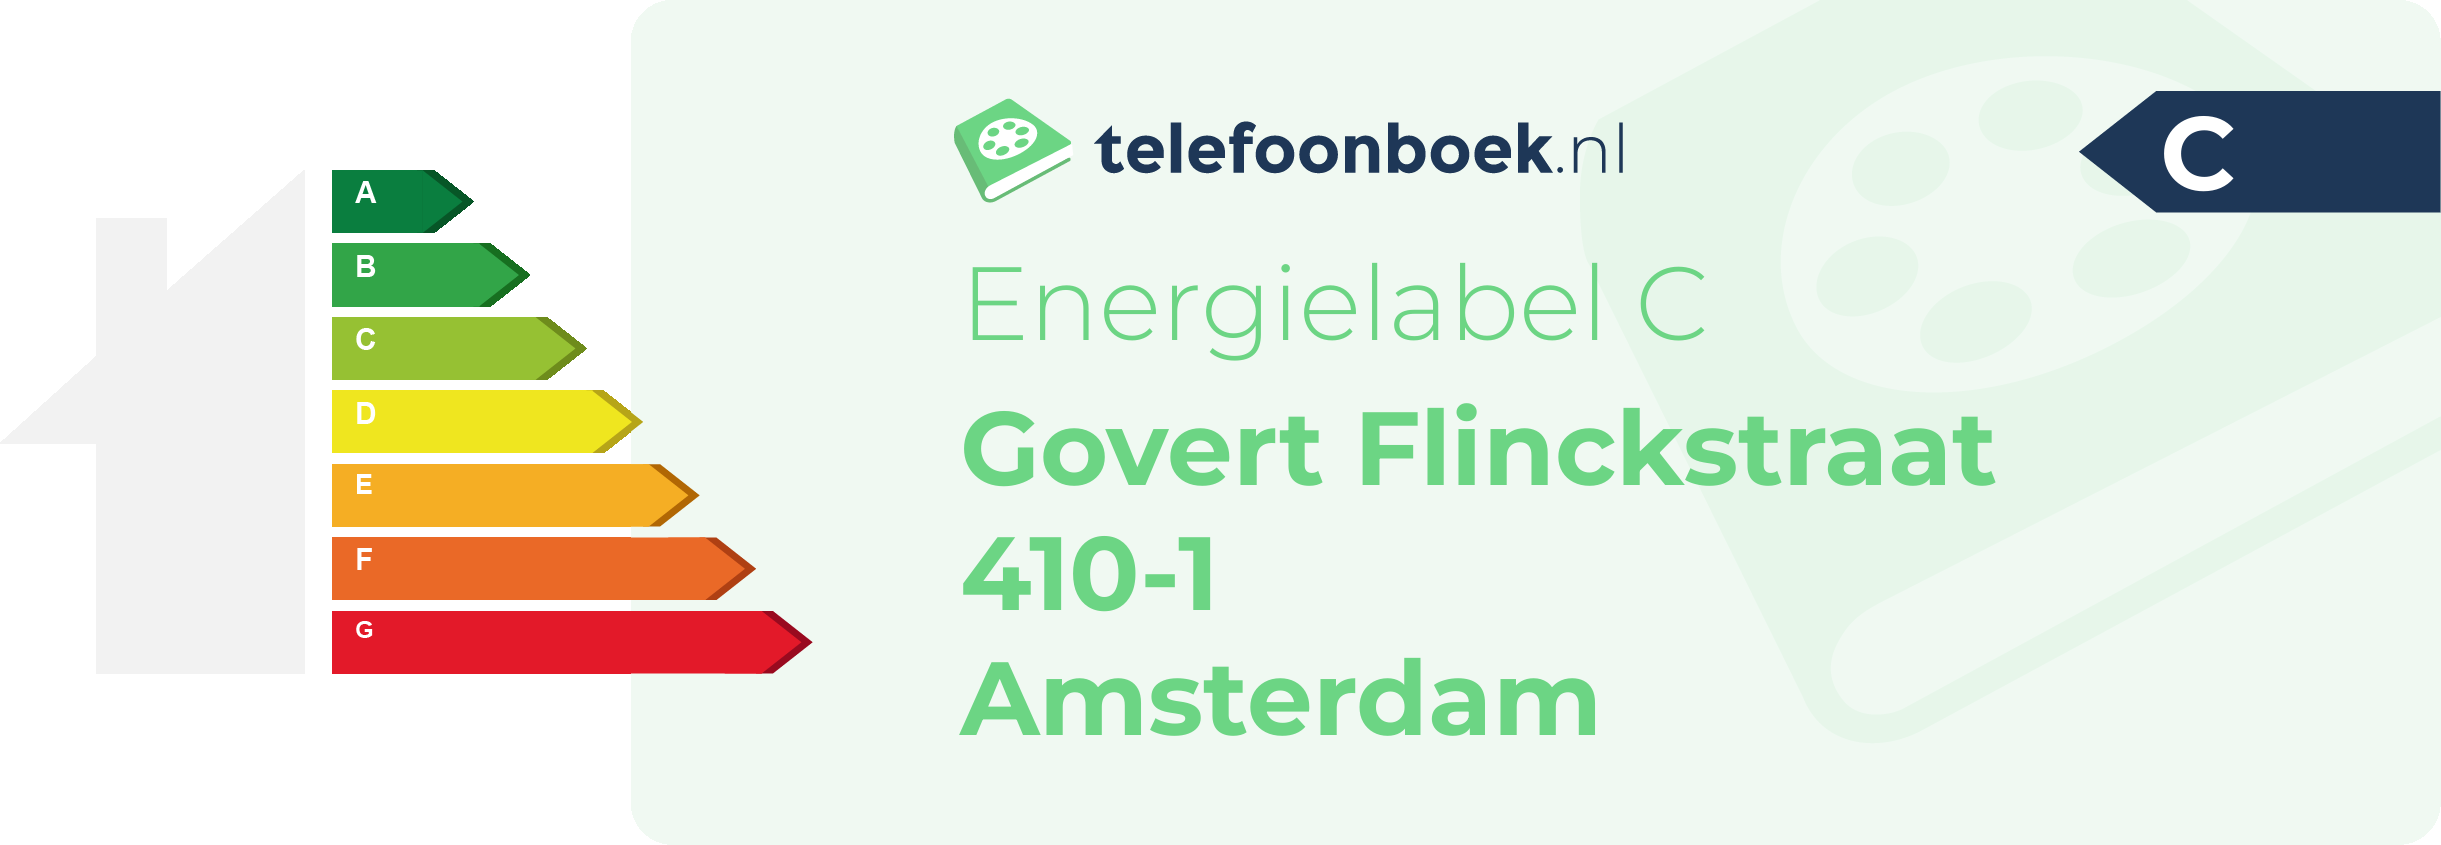 Energielabel Govert Flinckstraat 410-1 Amsterdam